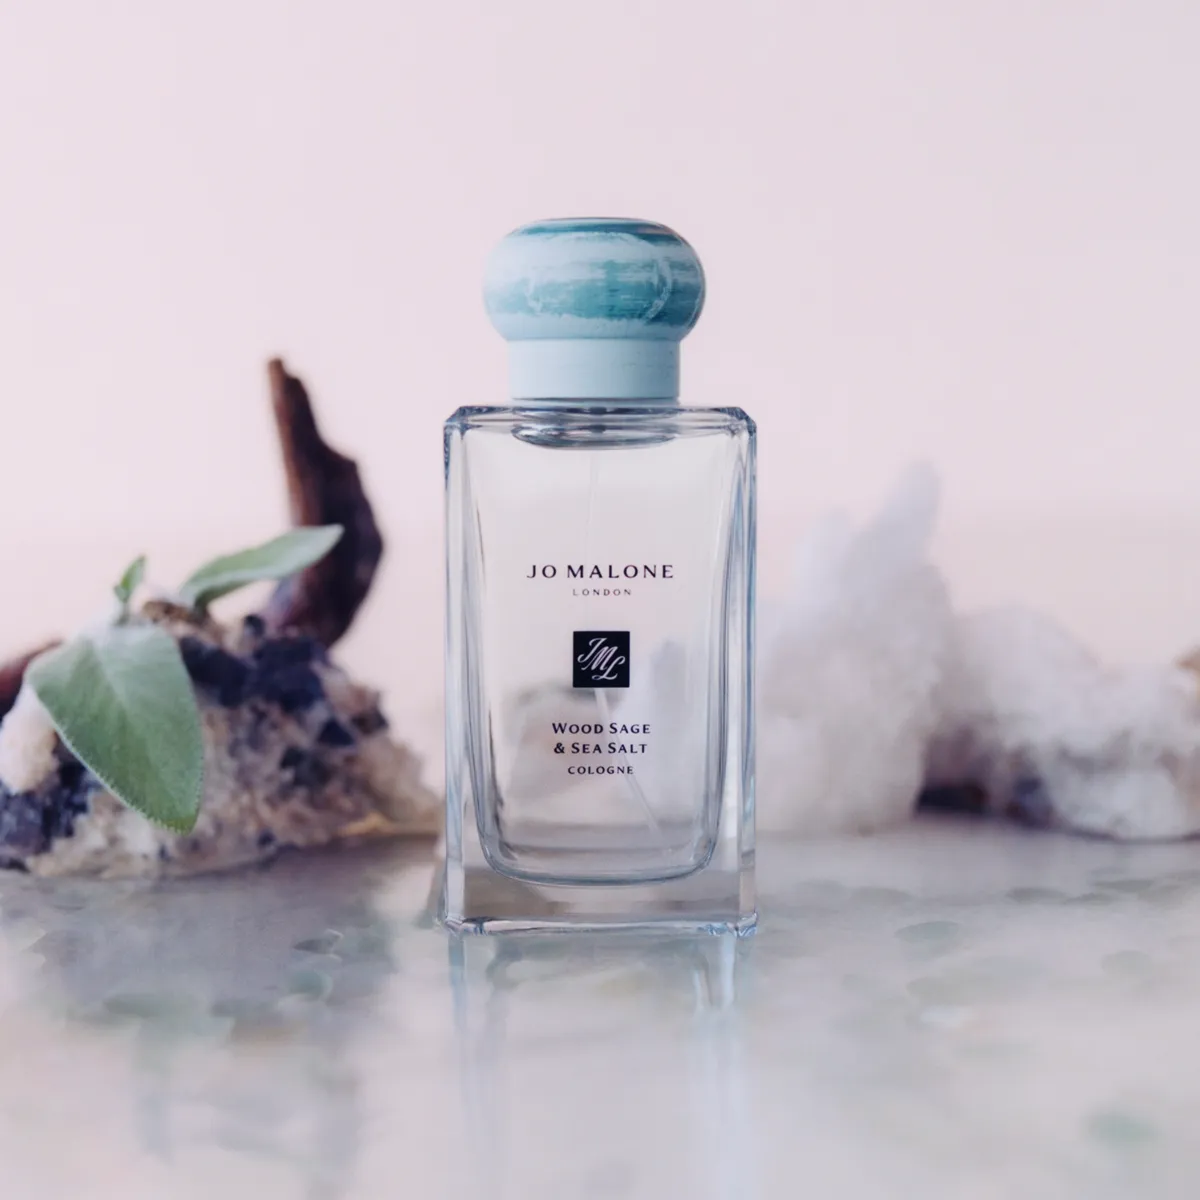 Jo Malone London Wood Sage & Sea Salt
The Best Aquatic & Oceanic Perfumes